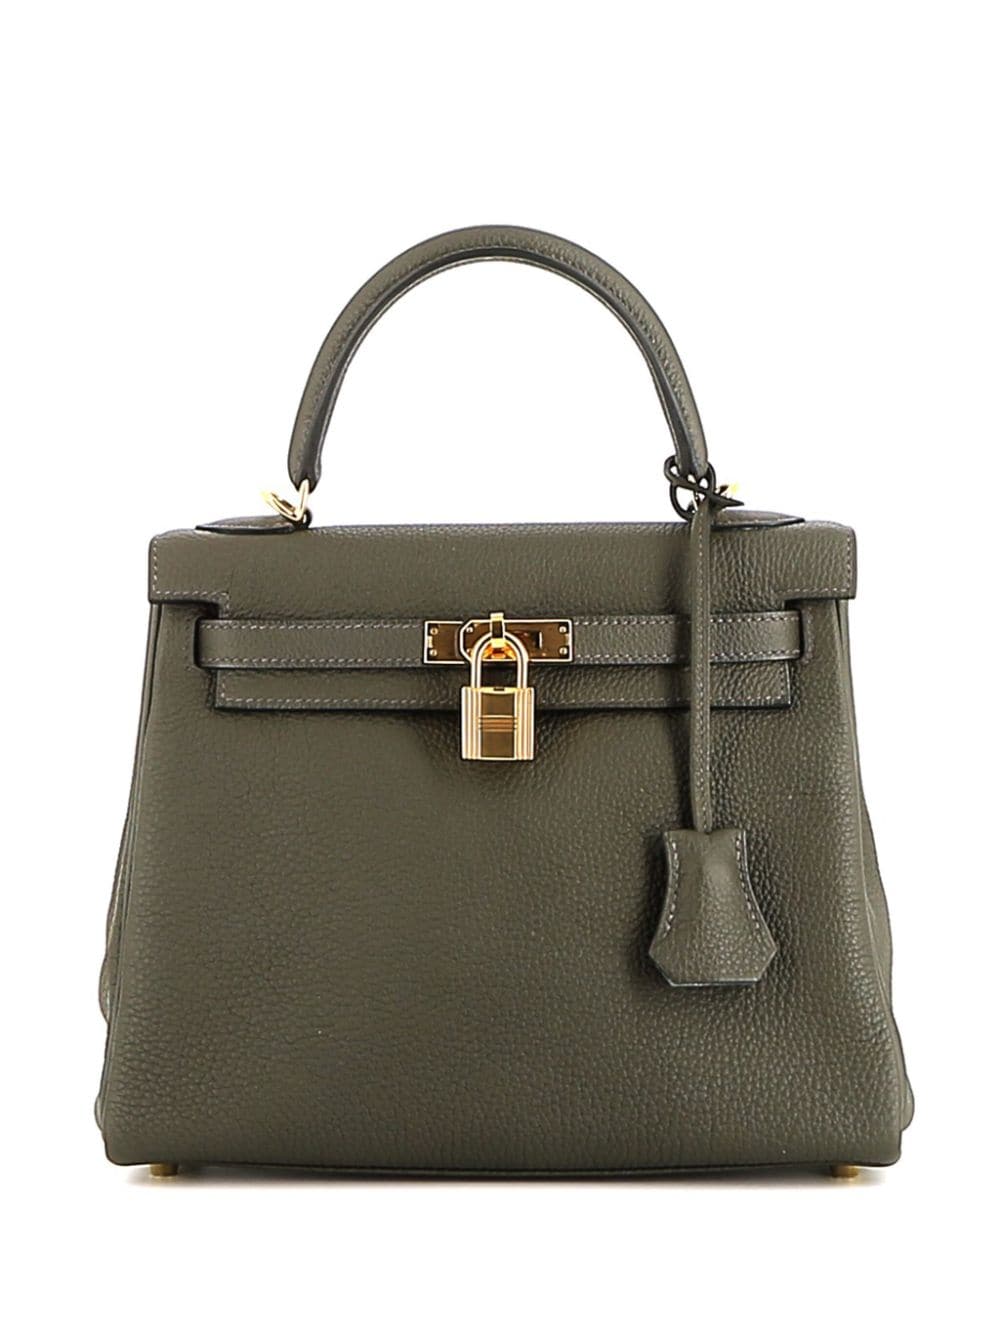 Hermès 2021 pre-owned Kelly 25 two-way handbag - Grün